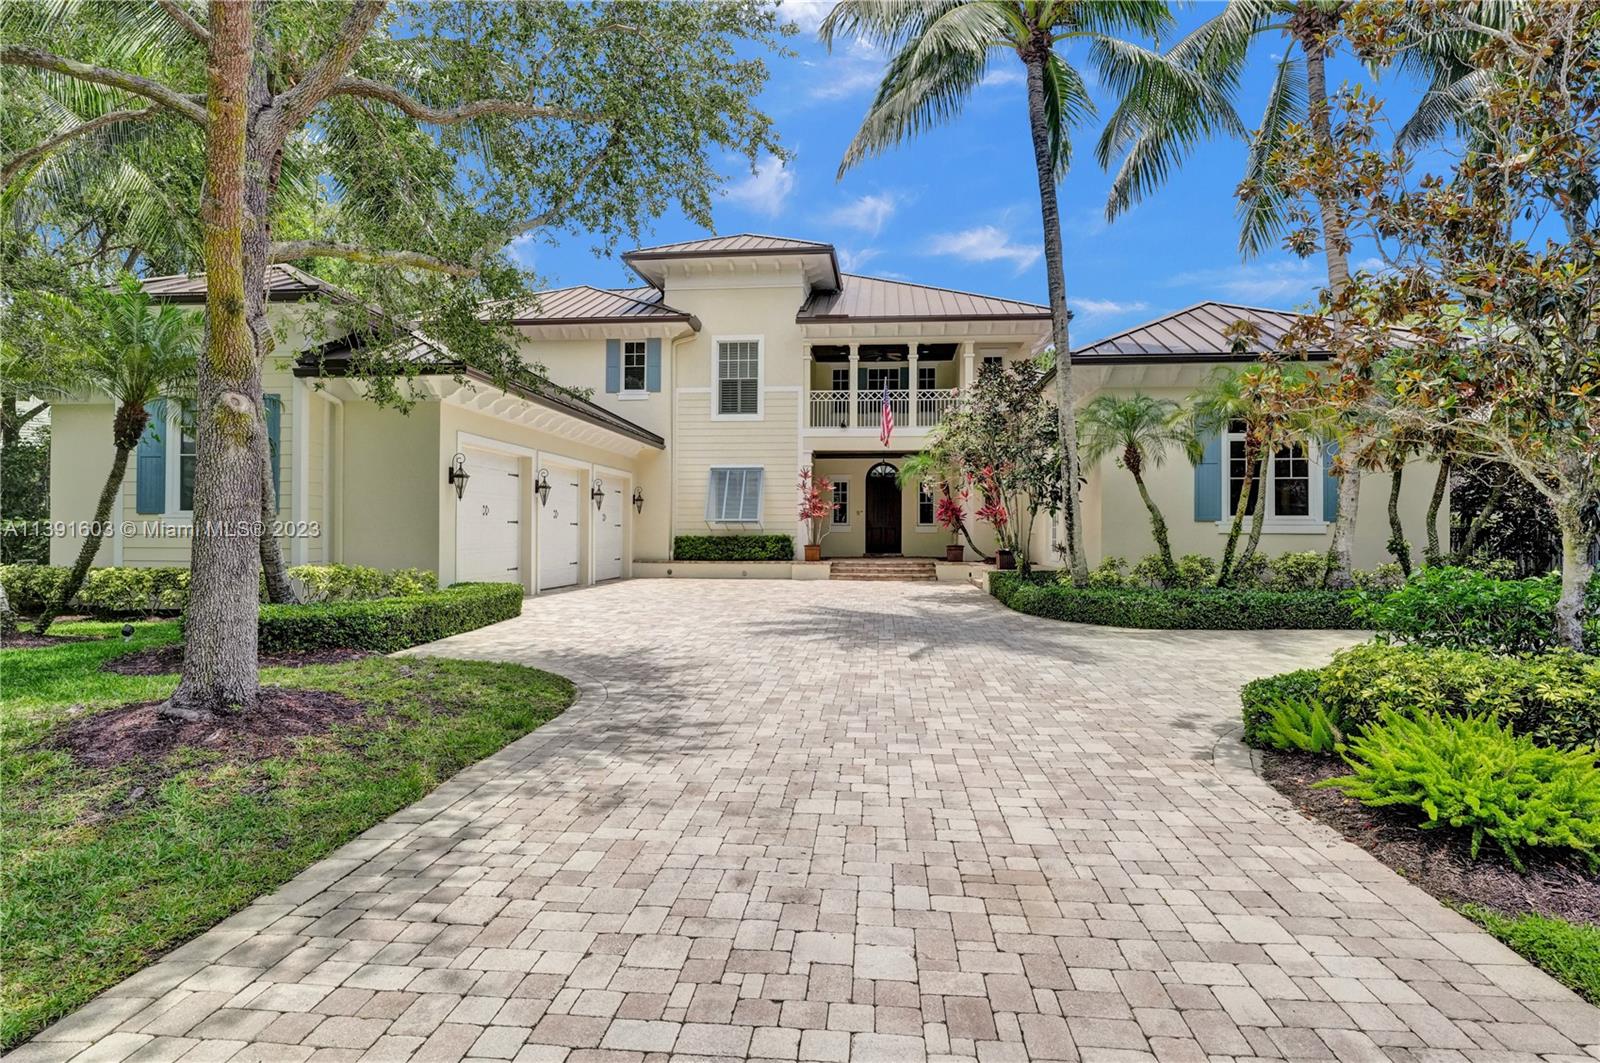 Property for Sale at 13360 Marsh Lndg Lndg, Palm Beach Gardens, Palm Beach County, Florida - Bedrooms: 5 
Bathrooms: 6.5  - $5,189,000